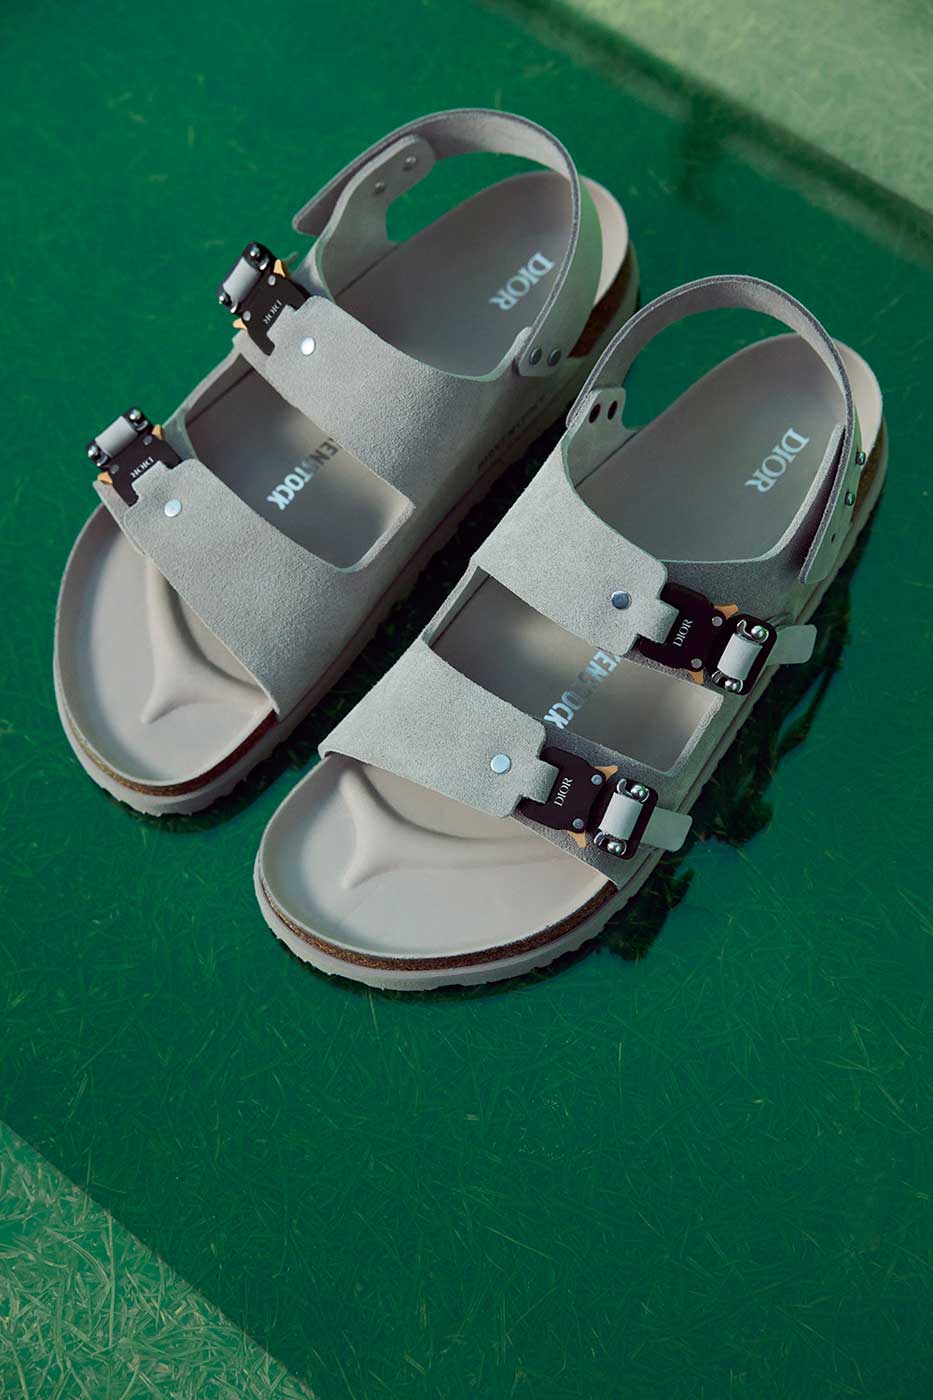 Dior x Birkenstock Collaboration Size US9-9.5 Sandals Current